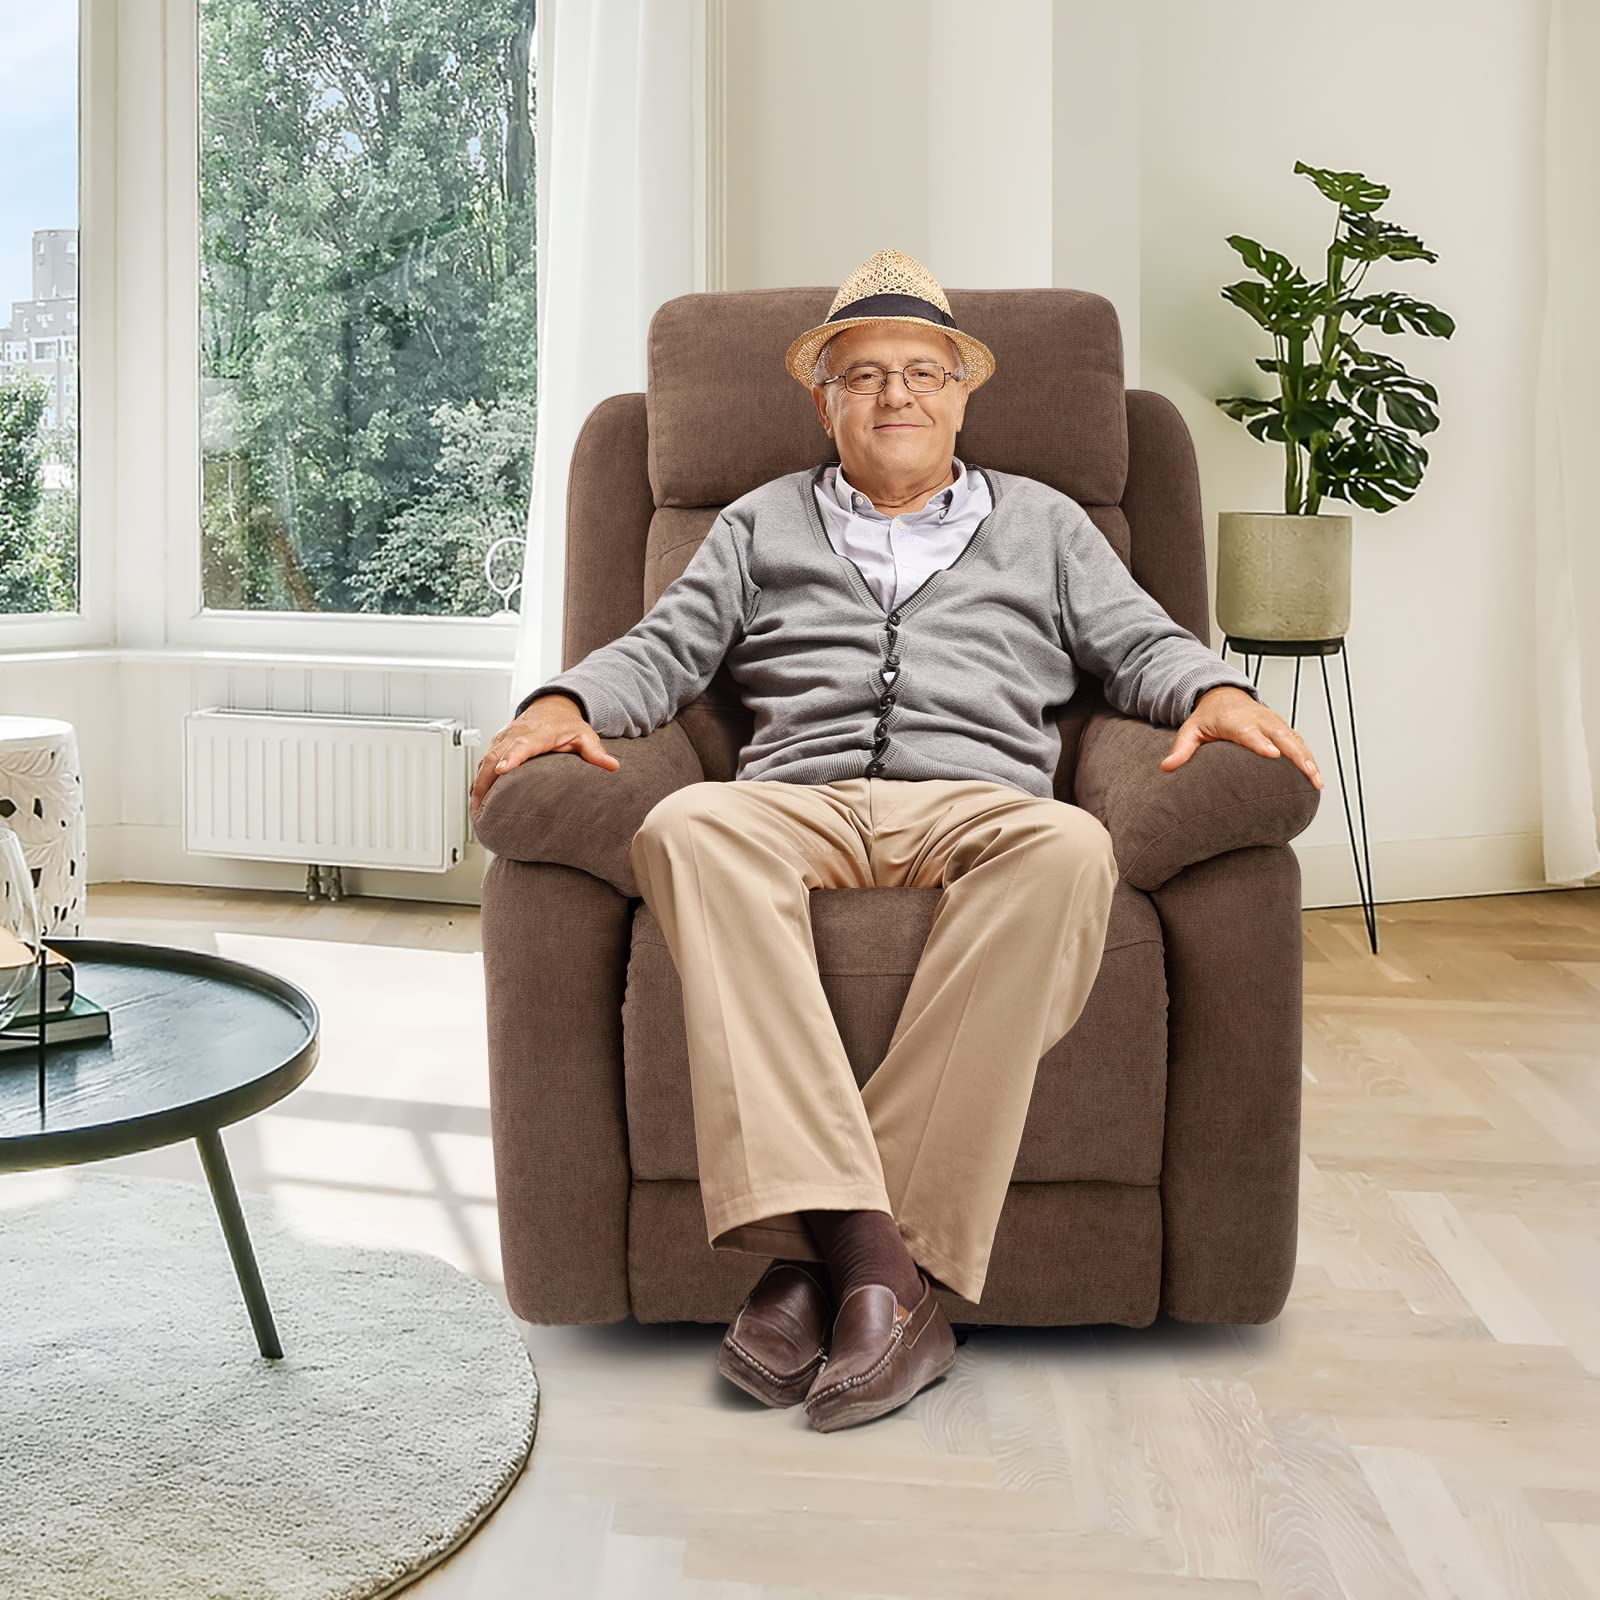 Giantex Power Lift Recliner Chairs for Elderly